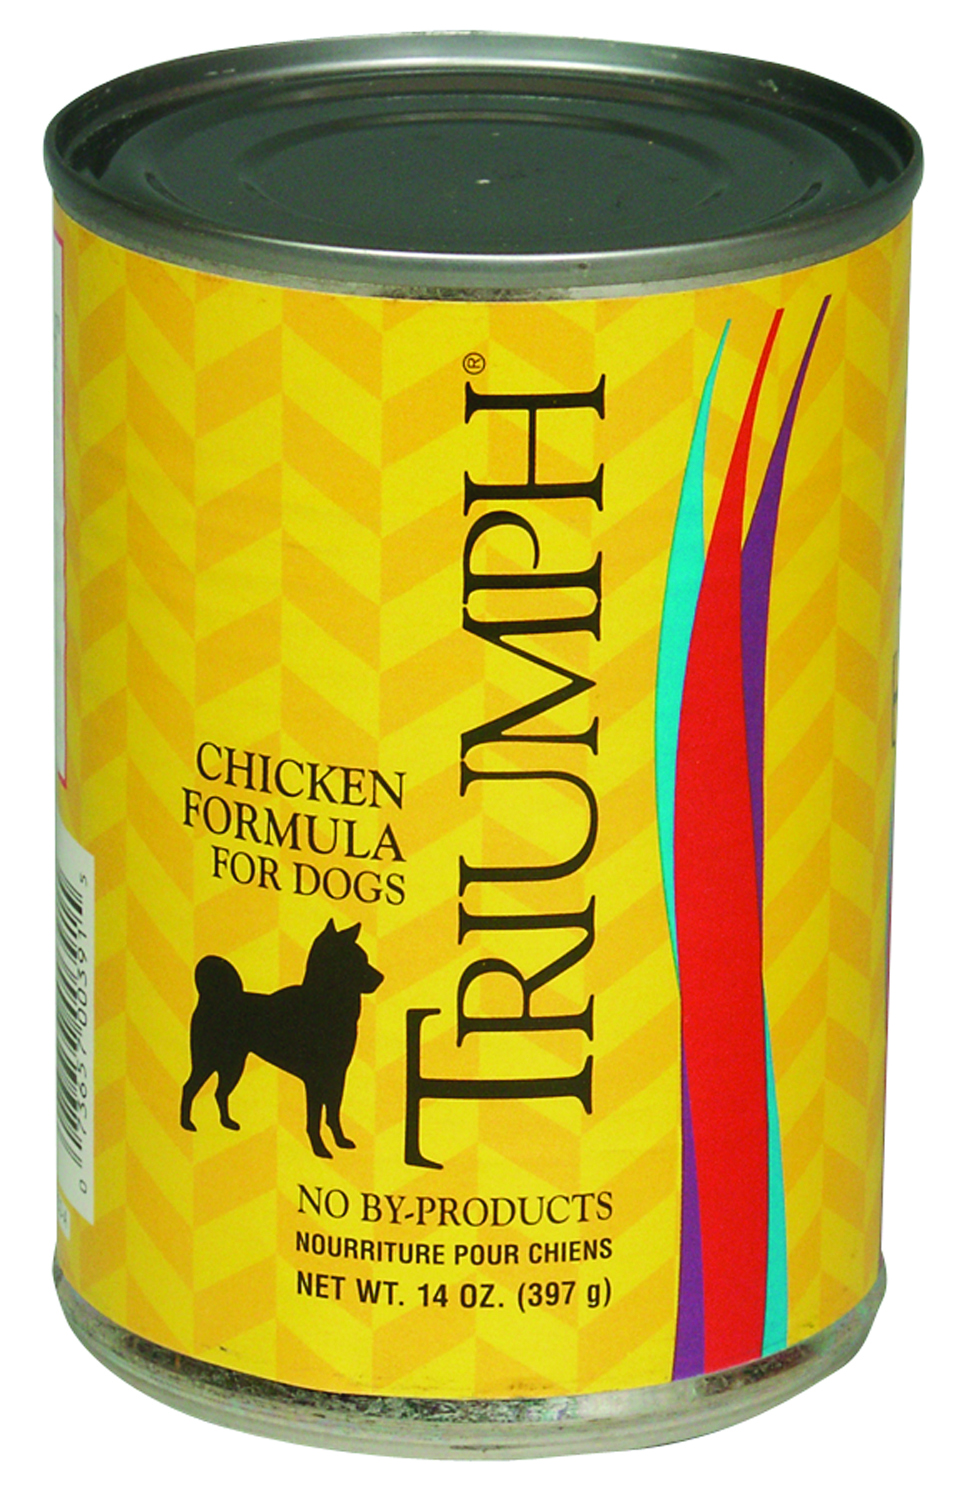 14 Oz Triumph Canned Dog Food - Chicken